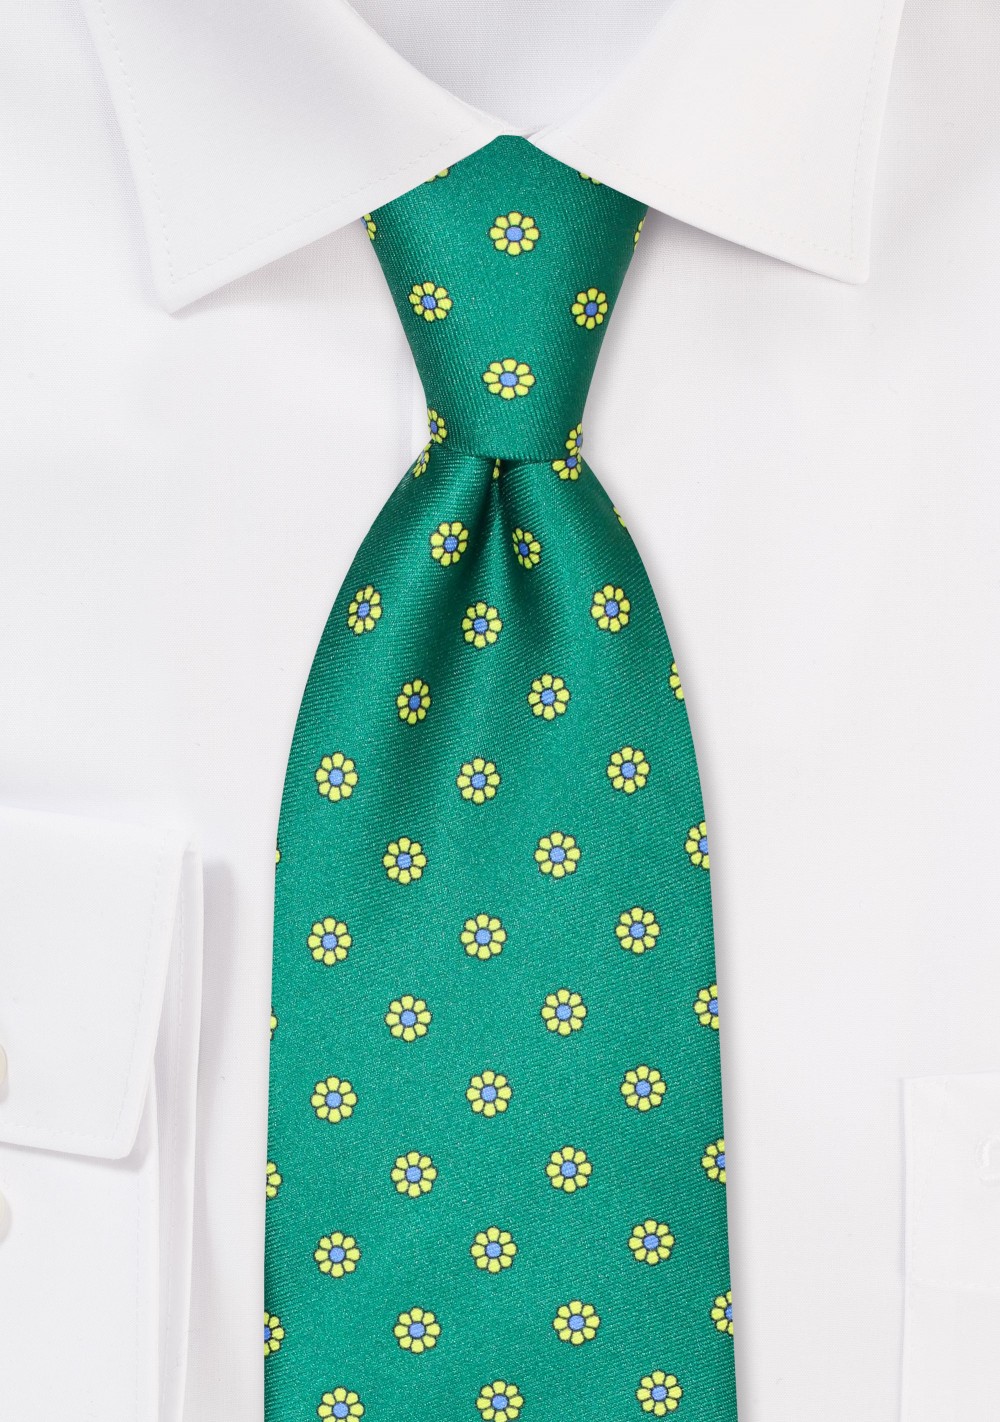 Green and Yellow Kids Tie | Flower Print Summer Tie in Shamrock Green ...